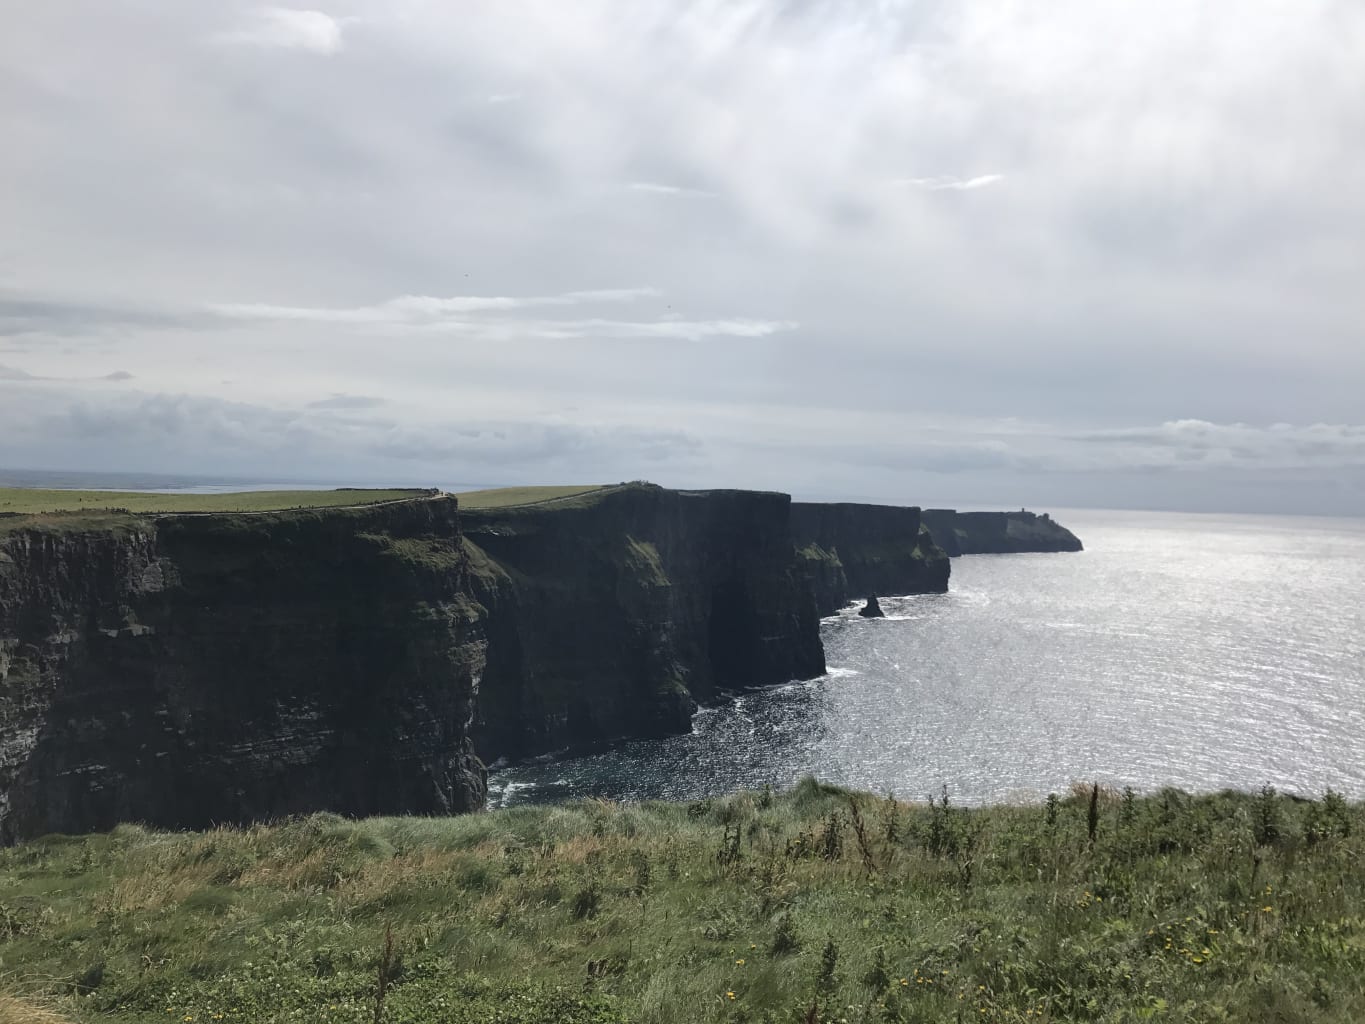 Cliffs overlooking the ocean in Maynooth, Ireland.